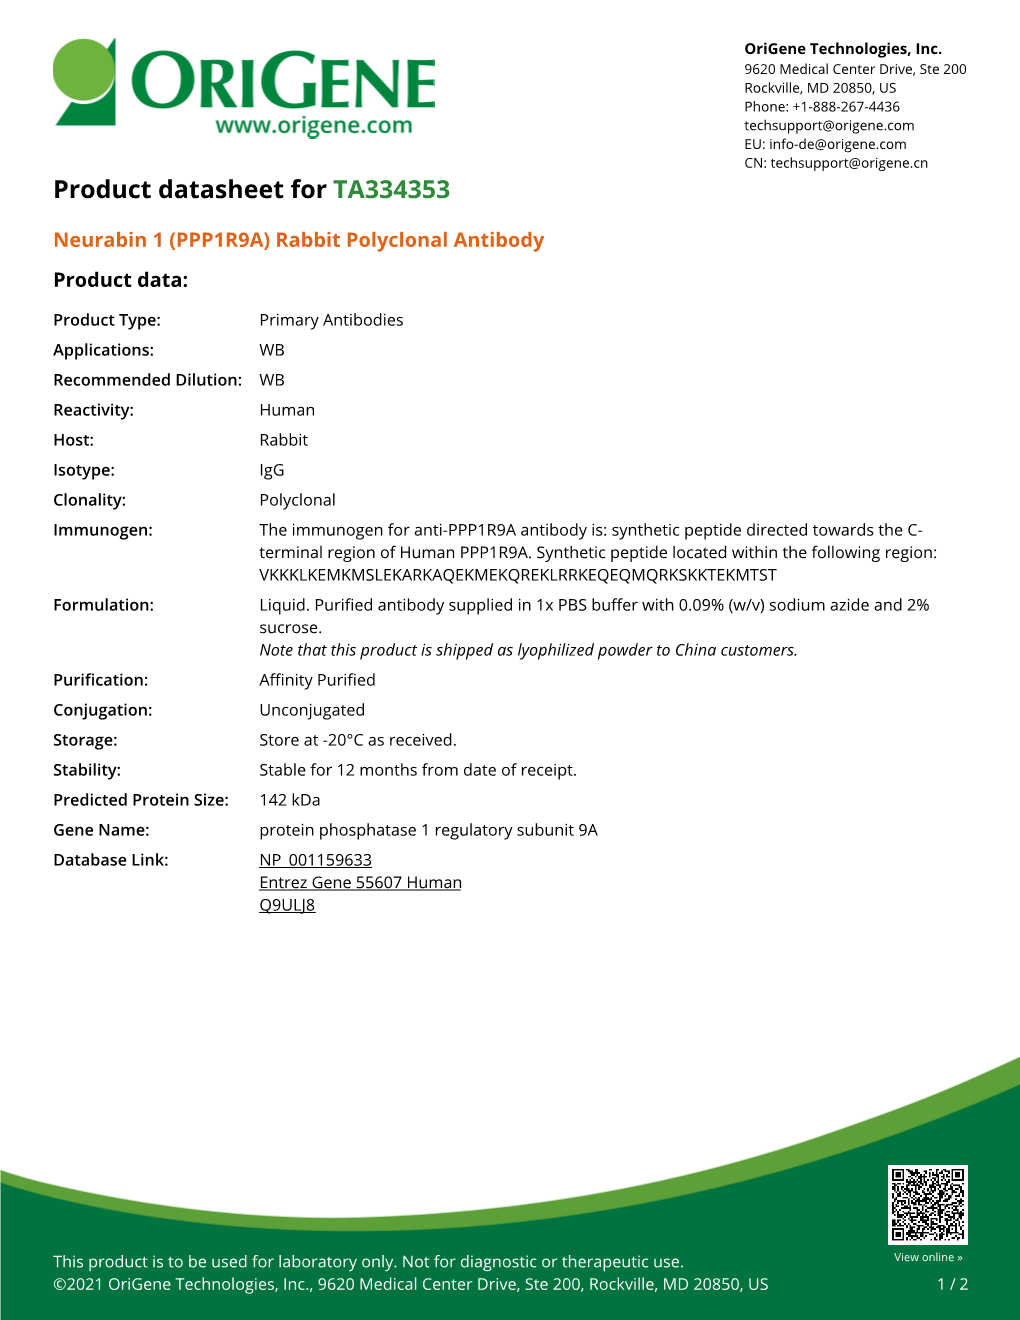 Neurabin 1 (PPP1R9A) Rabbit Polyclonal Antibody Product Data